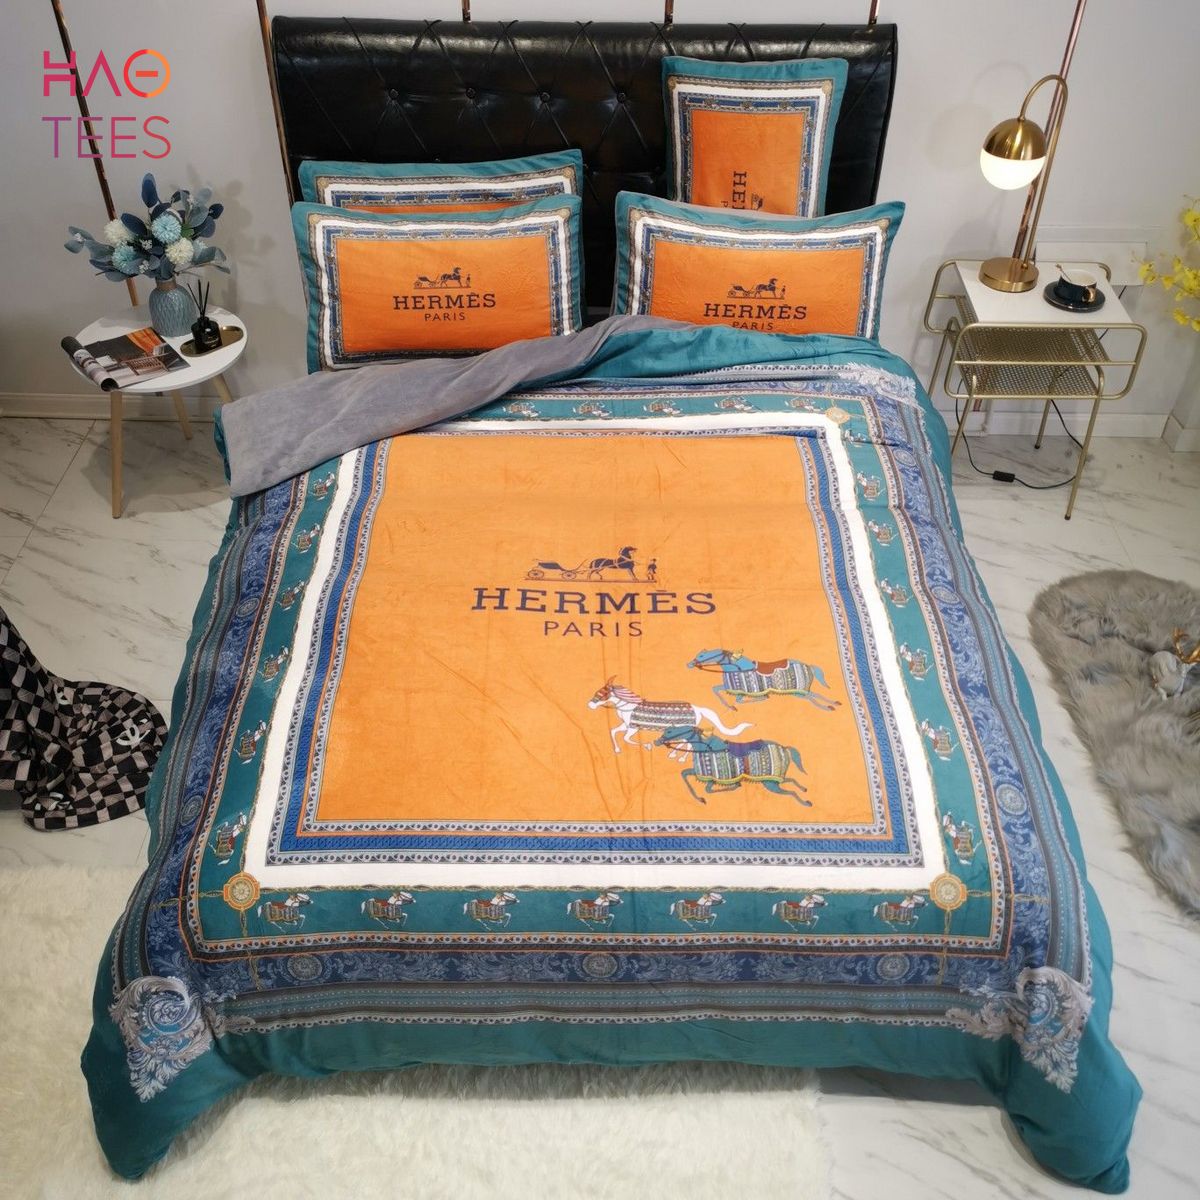 TREND Hermes Paris Luxury Brand Bedding Sets And Bedroom Sets